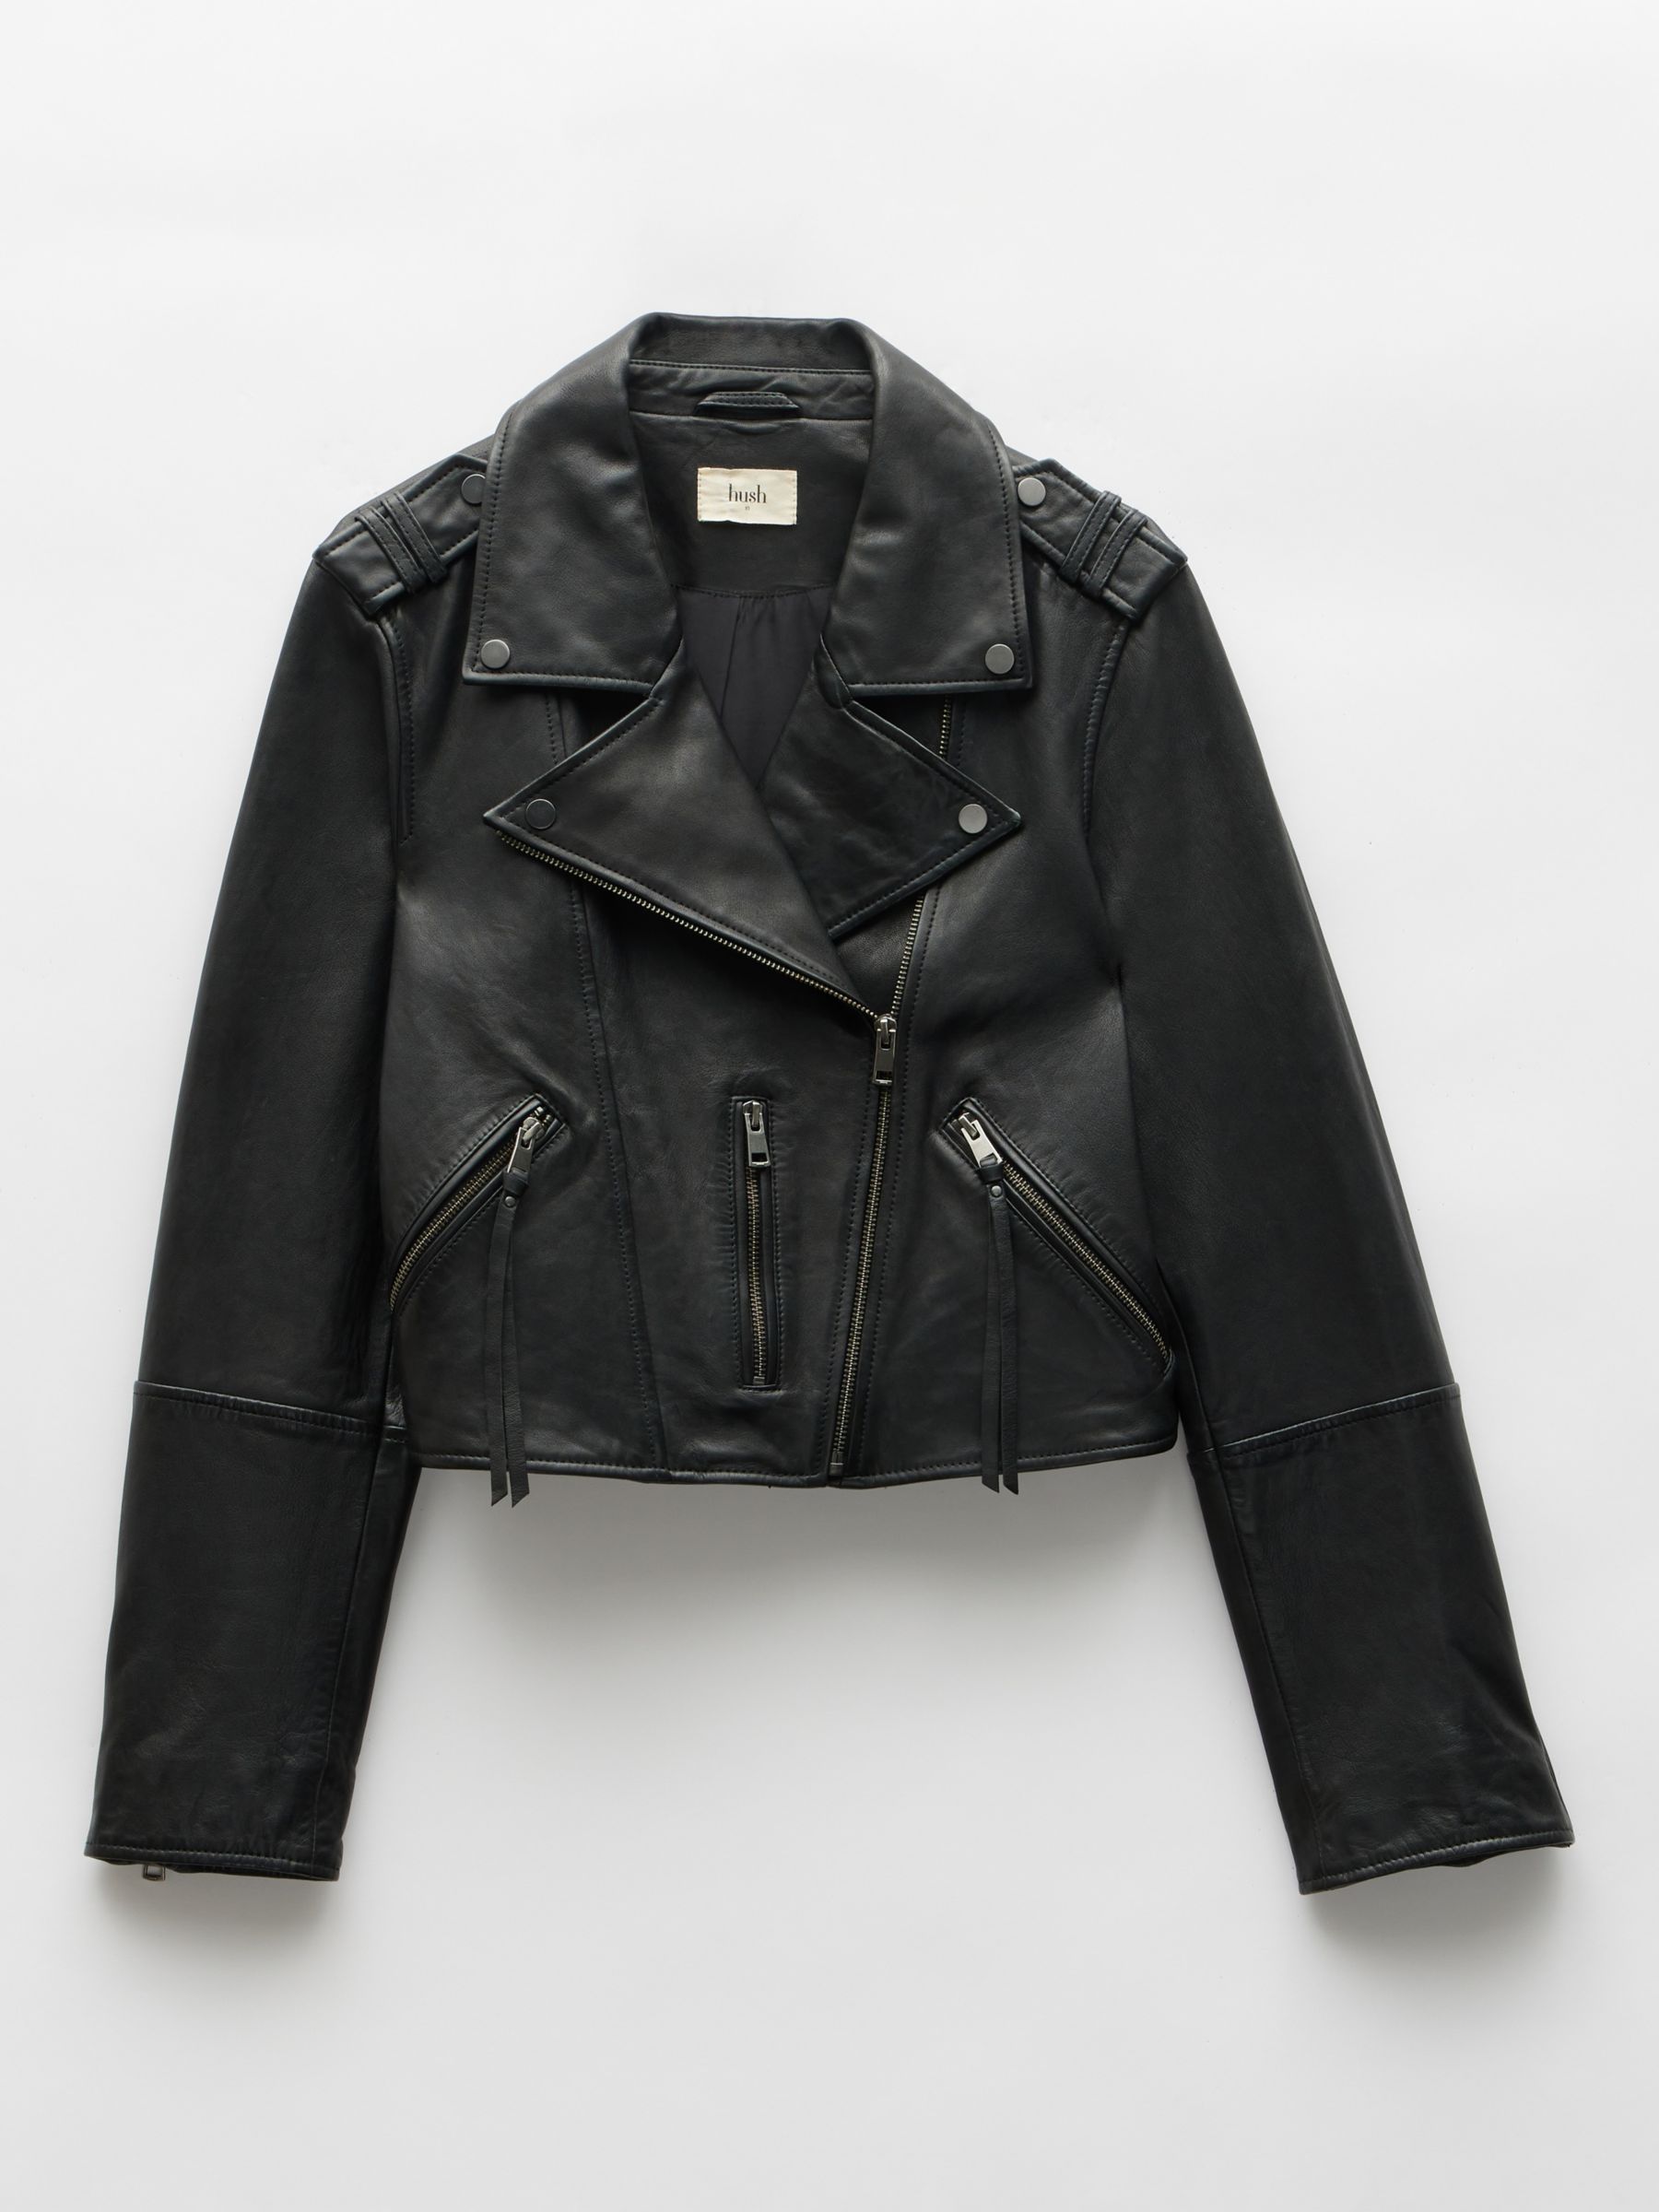 HUSH Jet Cropped Leather Biker Jacket, Black at John Lewis & Partners